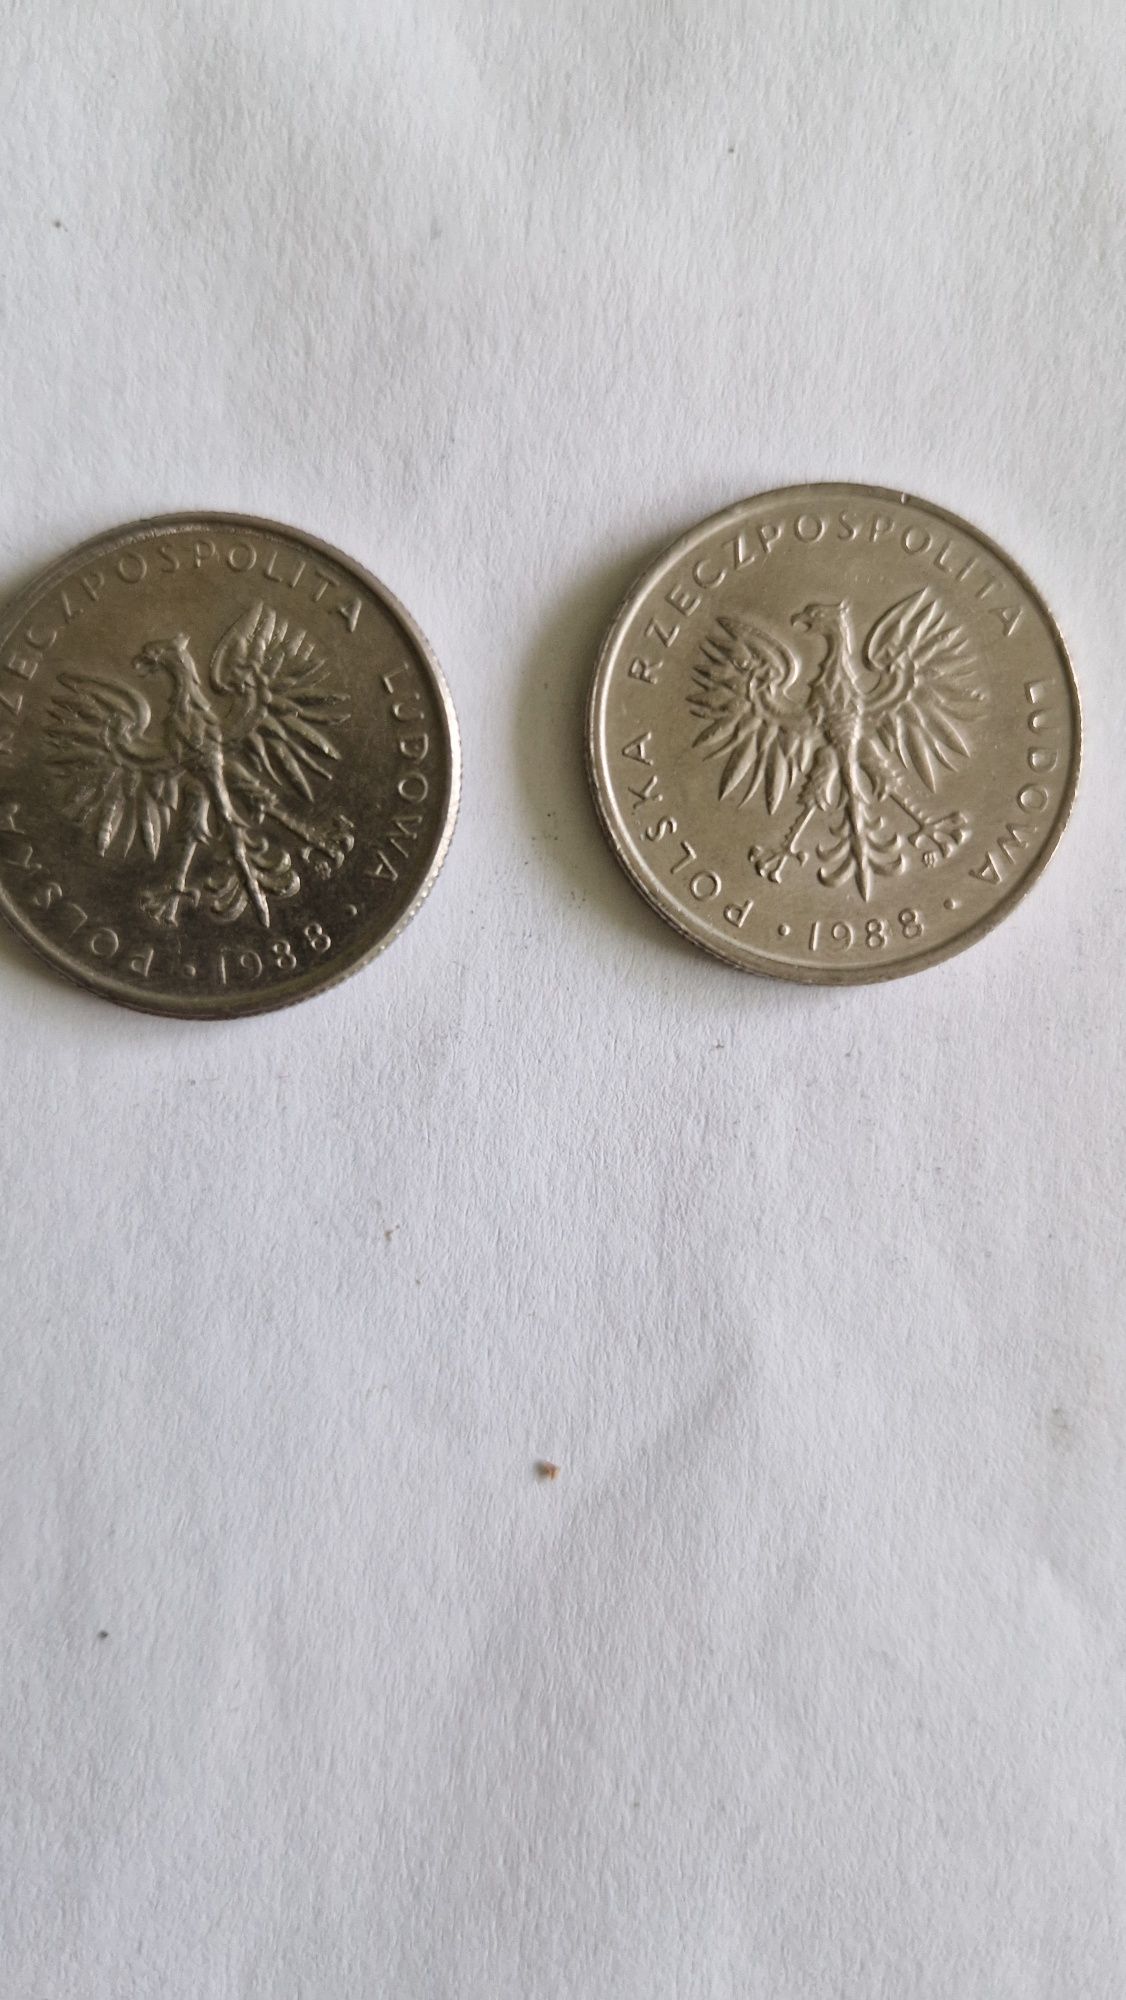 Monety 10 zł. z 1988 r.